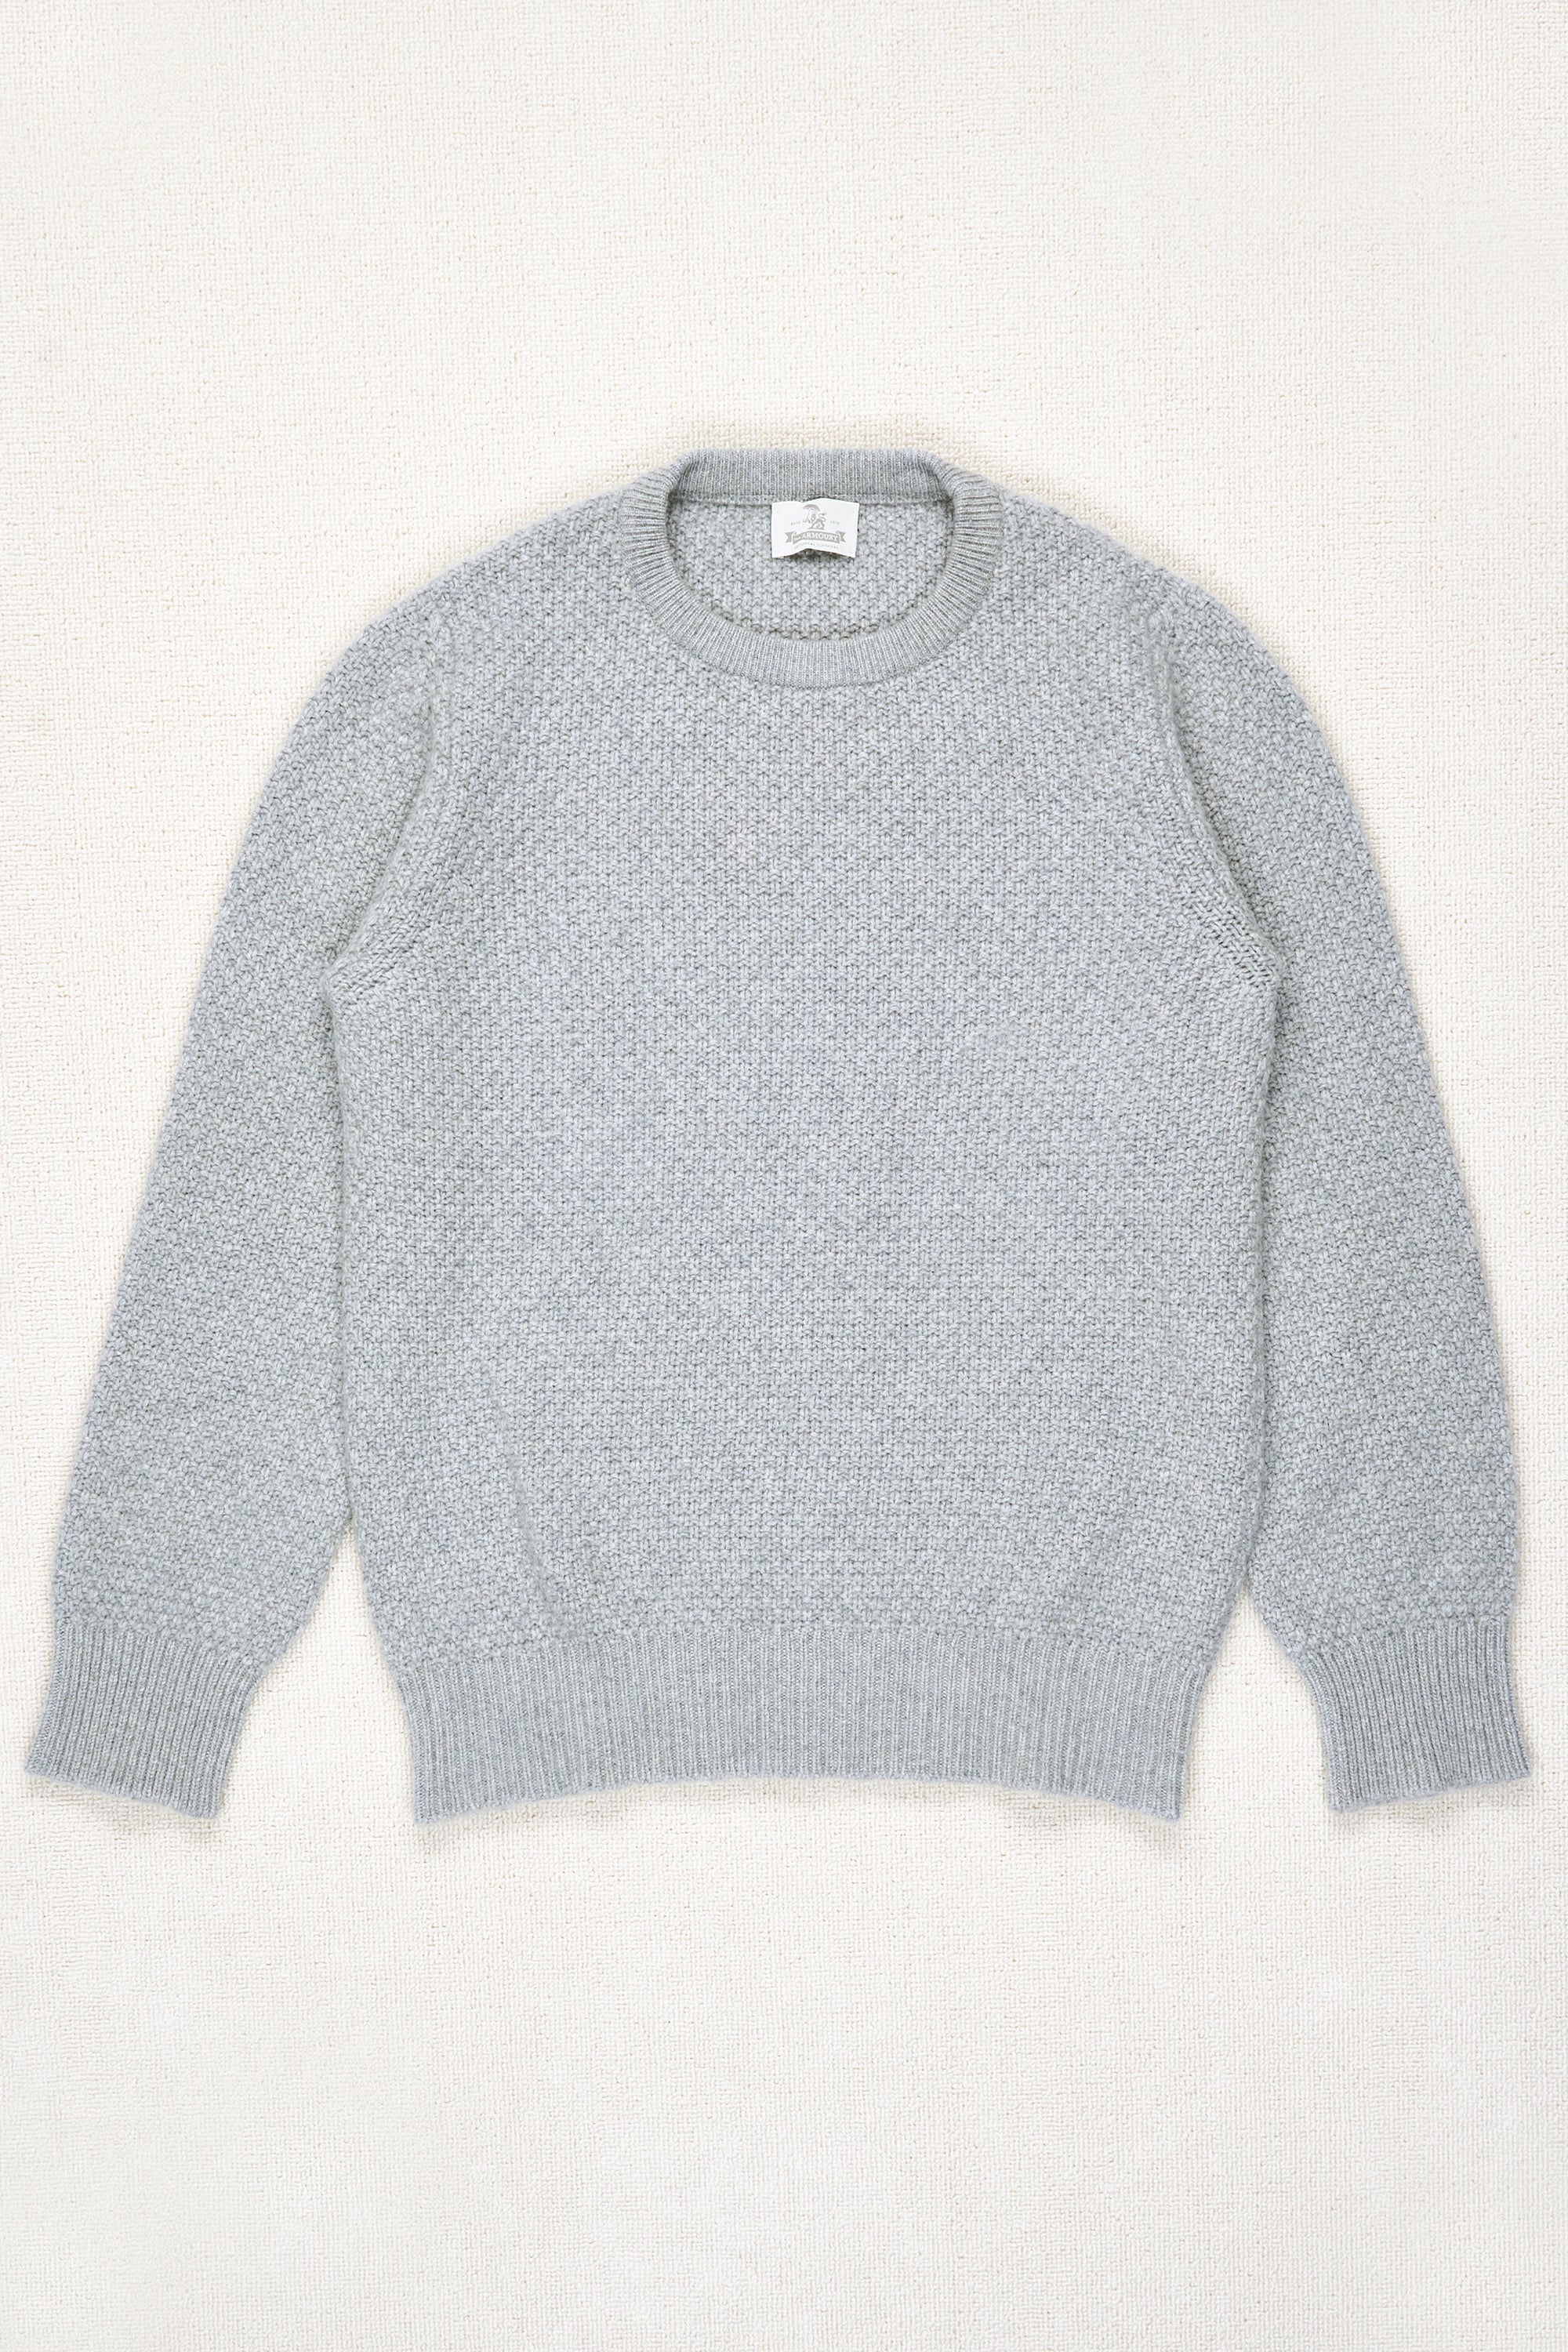 The Armoury Grey Cashmere Basket Weave Crewneck Sweater